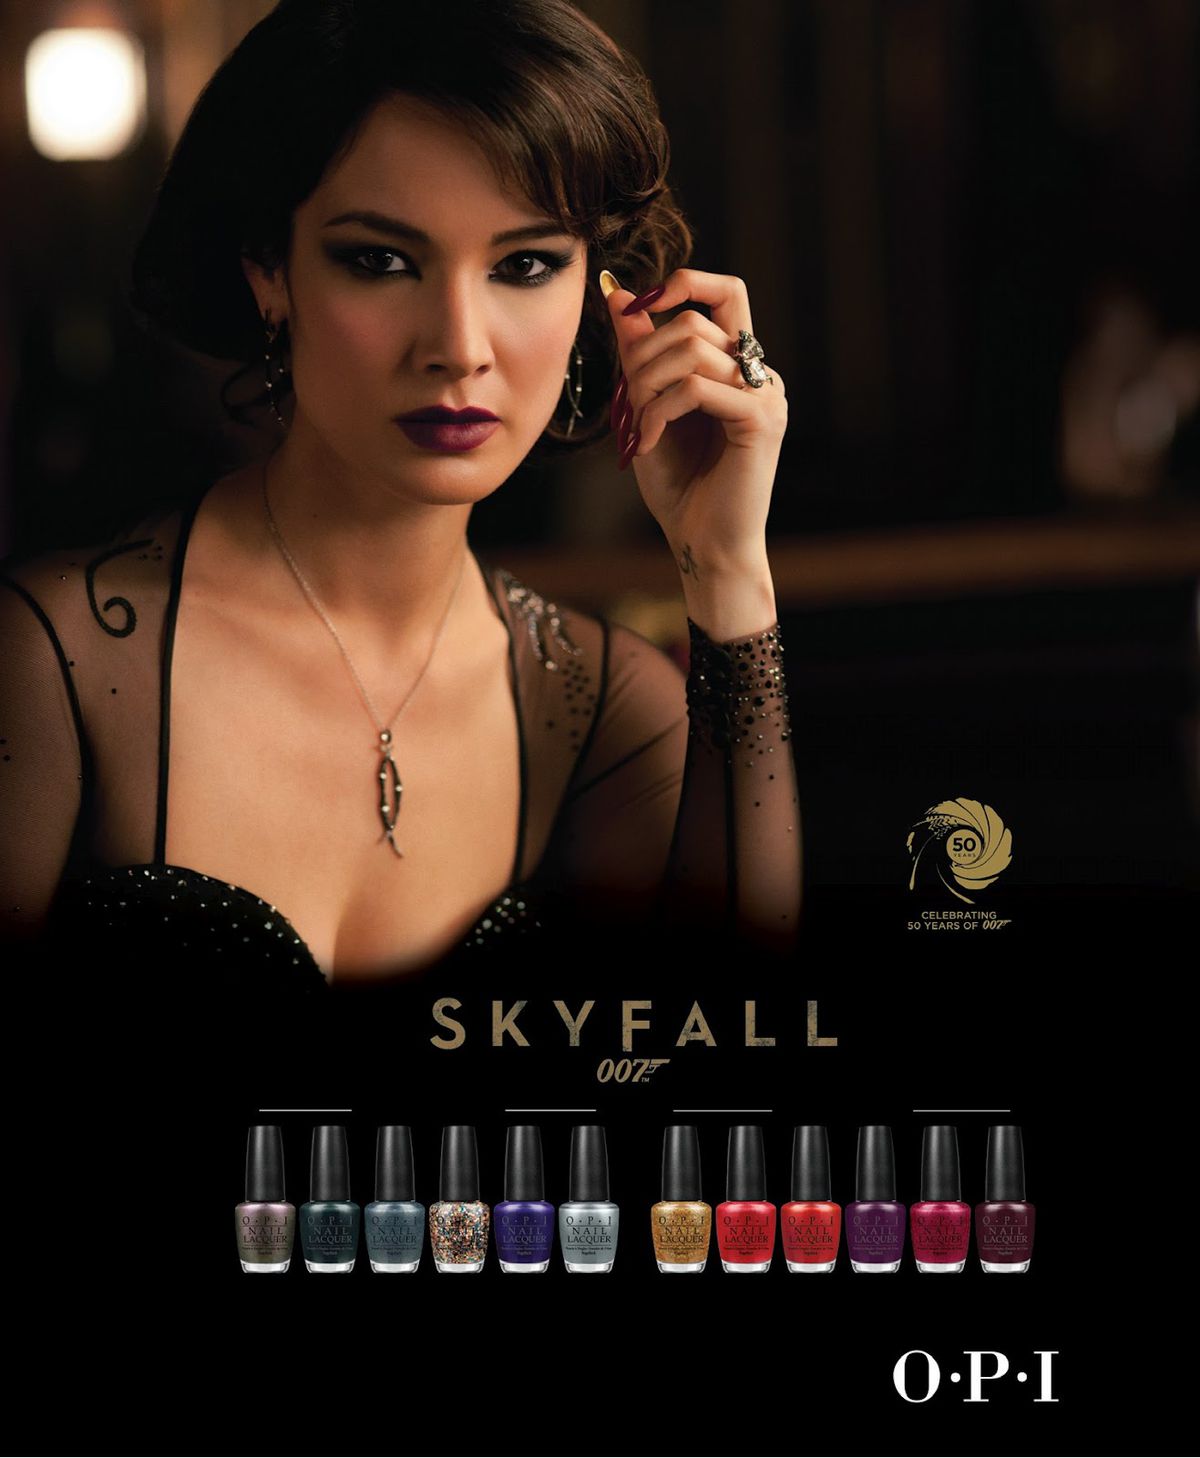 An ad for OPI’s Skyfall nail polish collection.